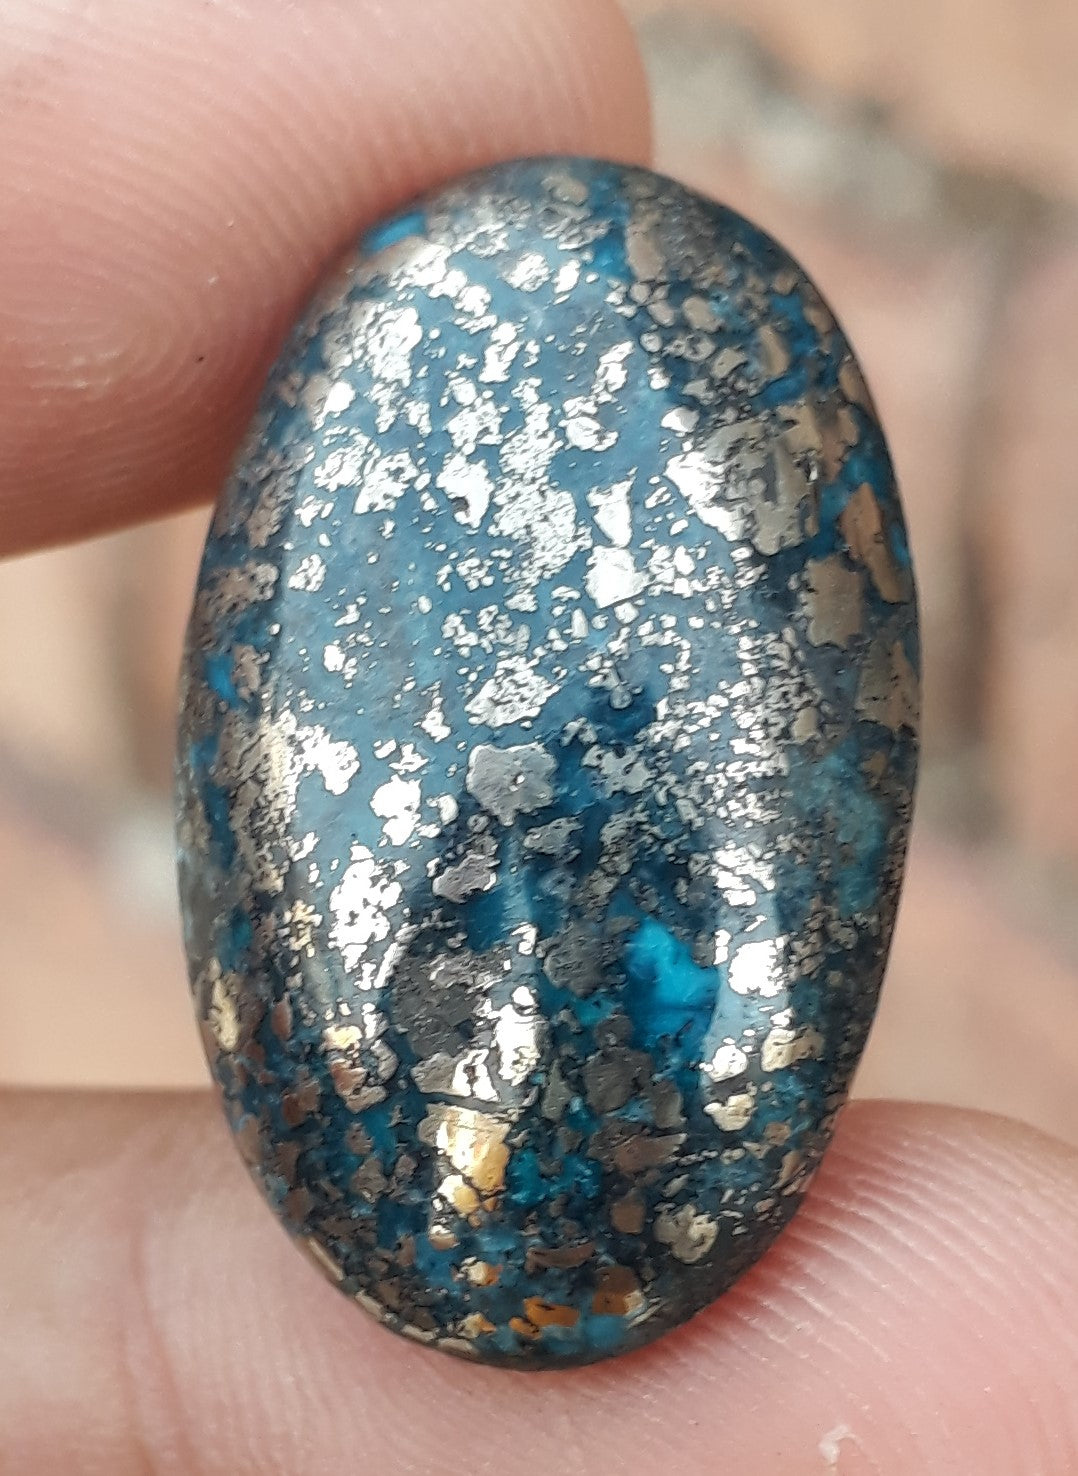 Natural Turquoise with Pyrite - Blue Matrix Turquoise - Shajri Feroza-41Ct